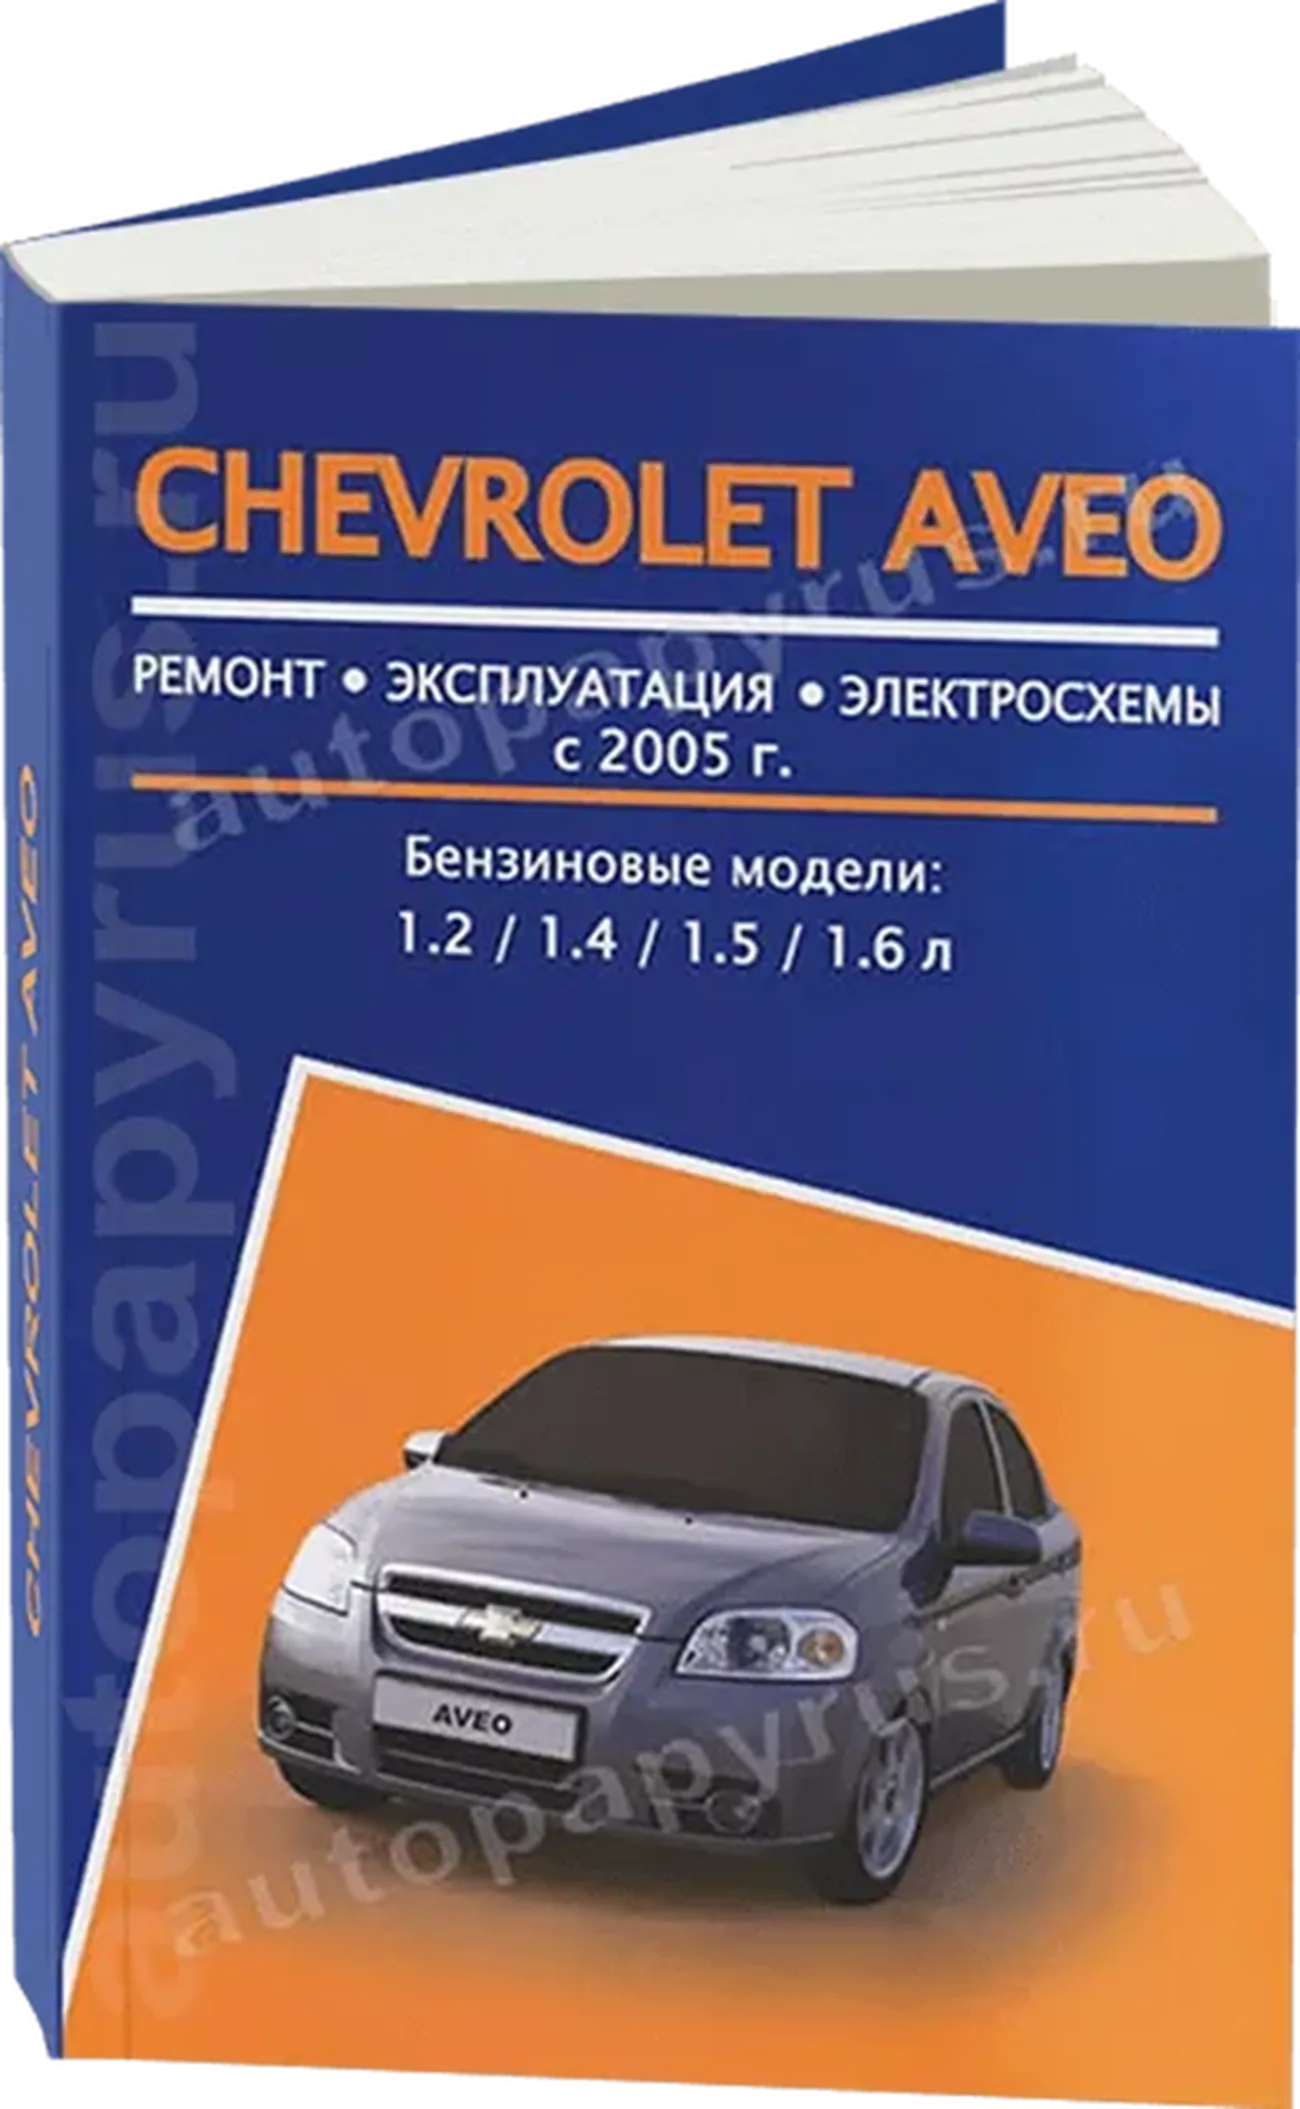 Книга: CHEVROLET AVEO (б) с 2005 г.в., рем., экспл., то | Авторесурс